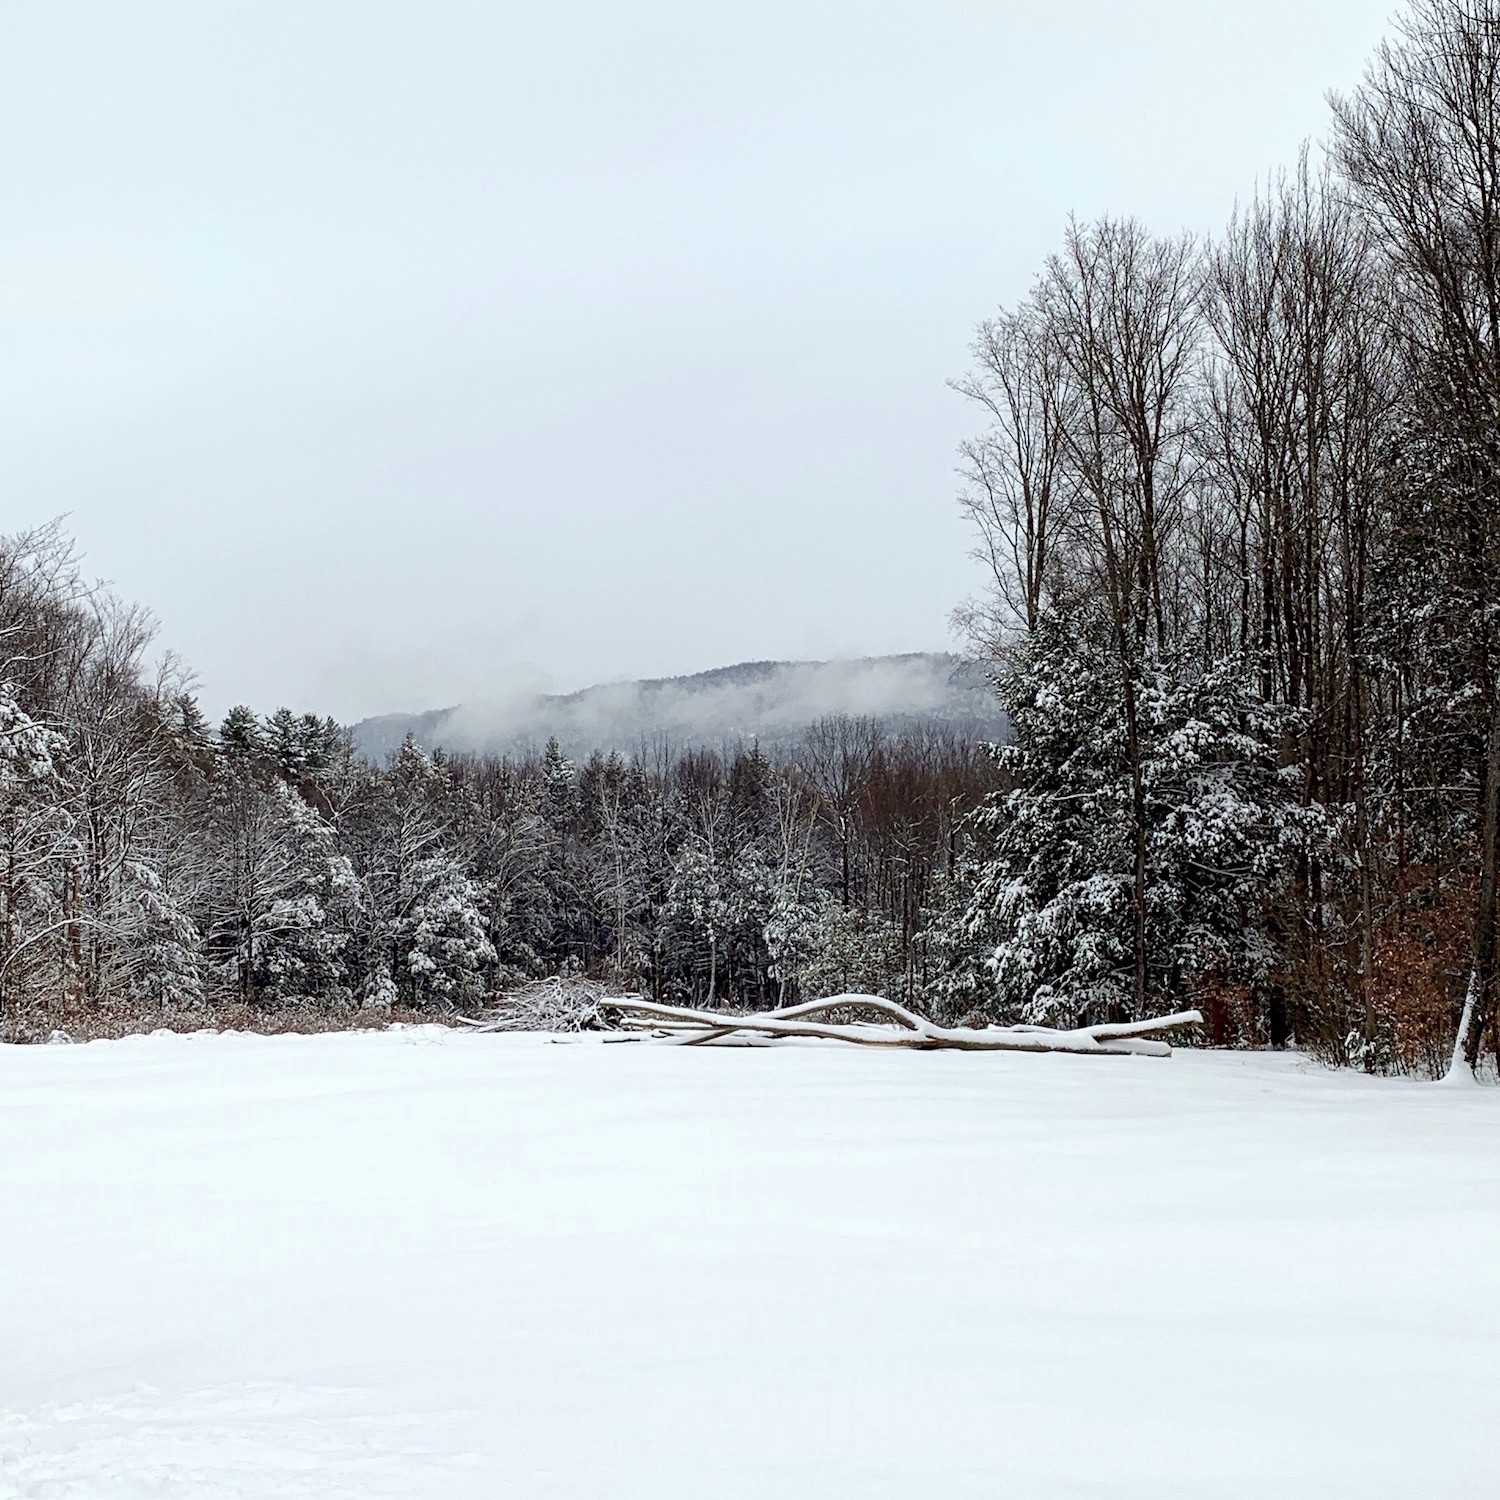 Adirondack Park I hate Winter - but it's beautiful - Disdain For Winter